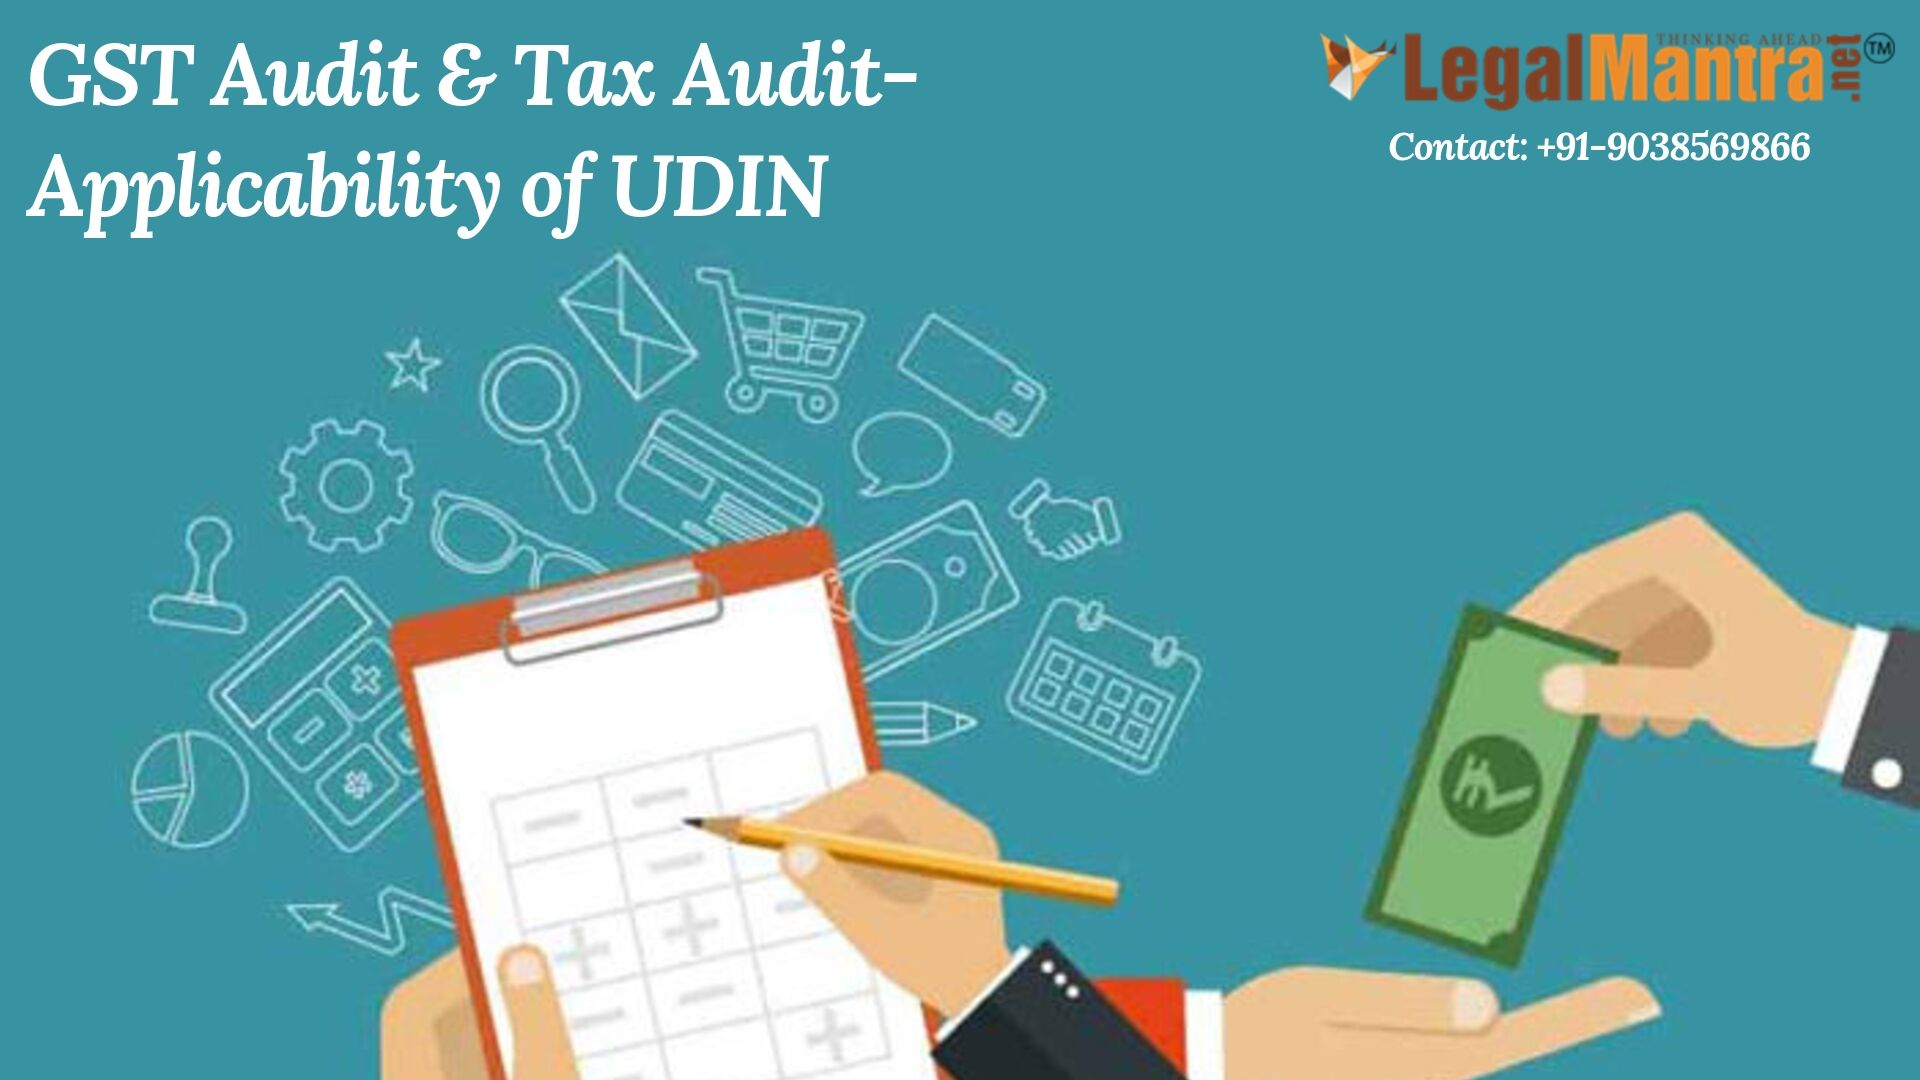 GST Audit & Tax Audit: Applicability of UDIN- FAQ